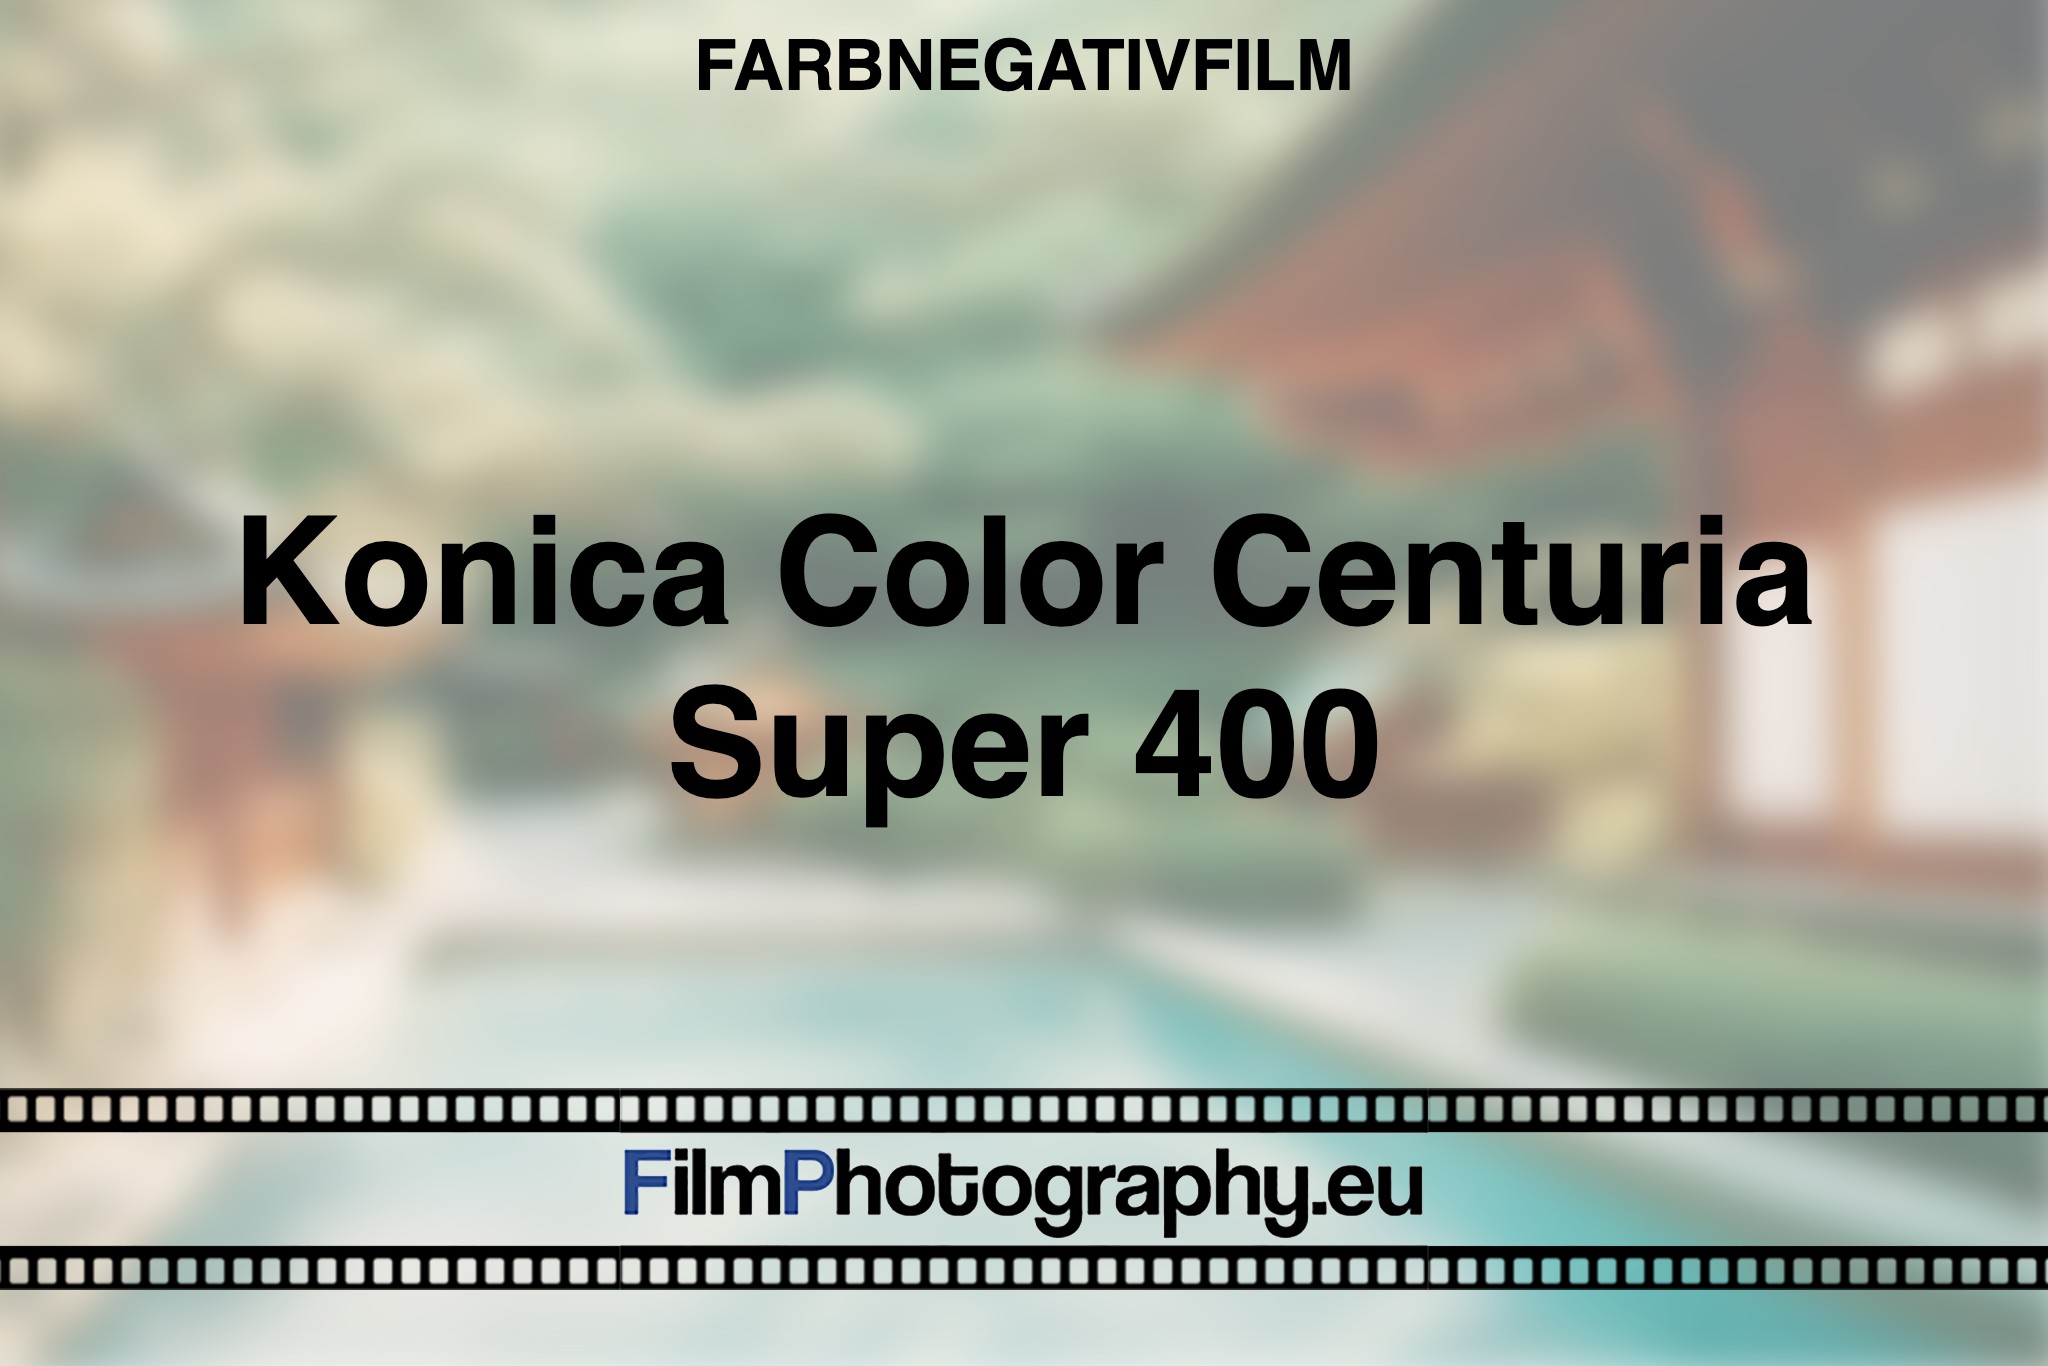 konica-color-centuria-super-400-farbnegativfilm-bnv